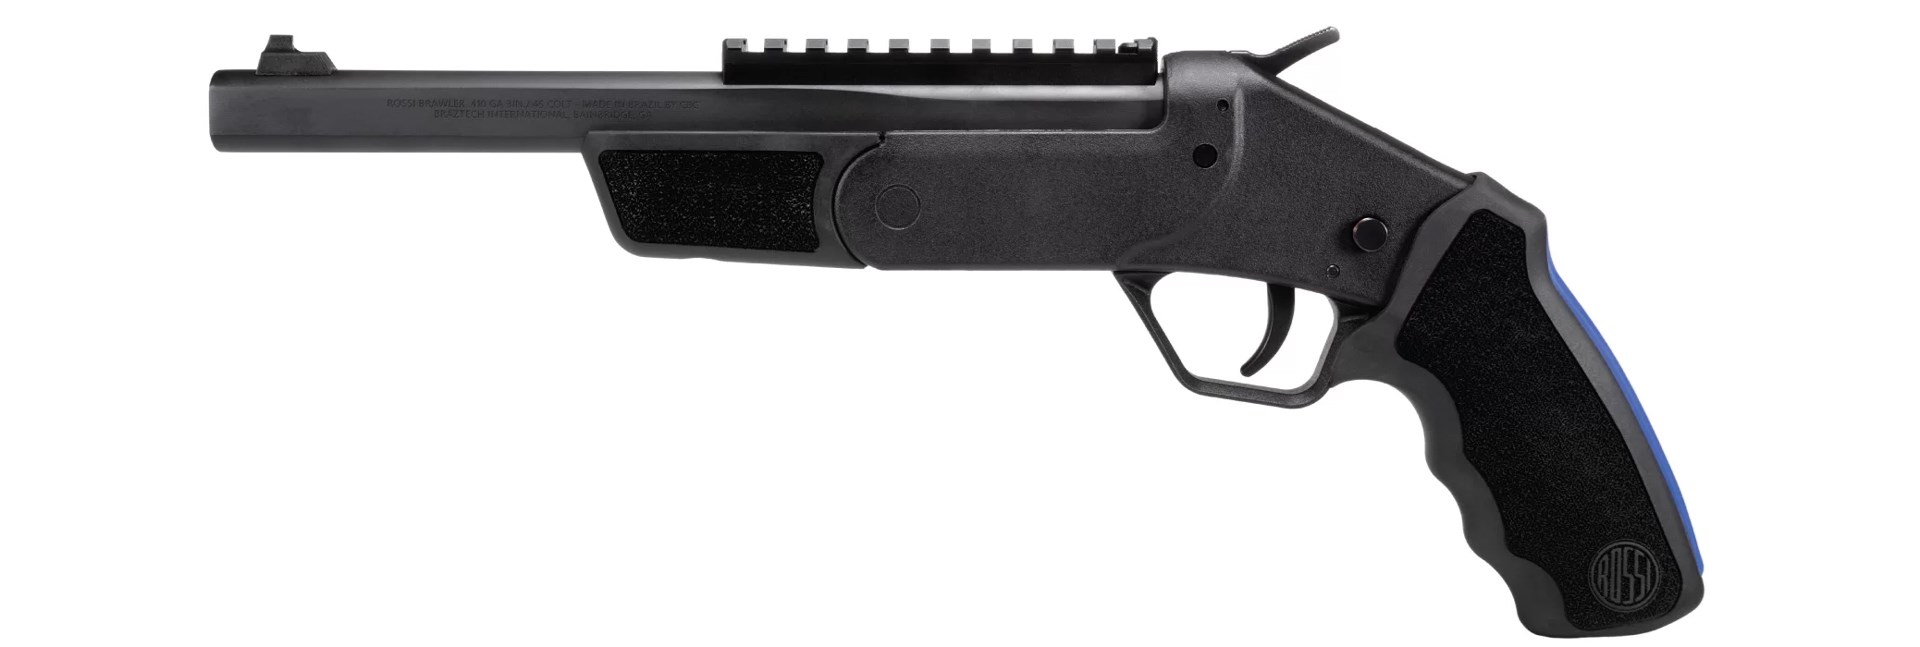 Rossi USA Brawler single-shot handgun break-action left-side view black gun